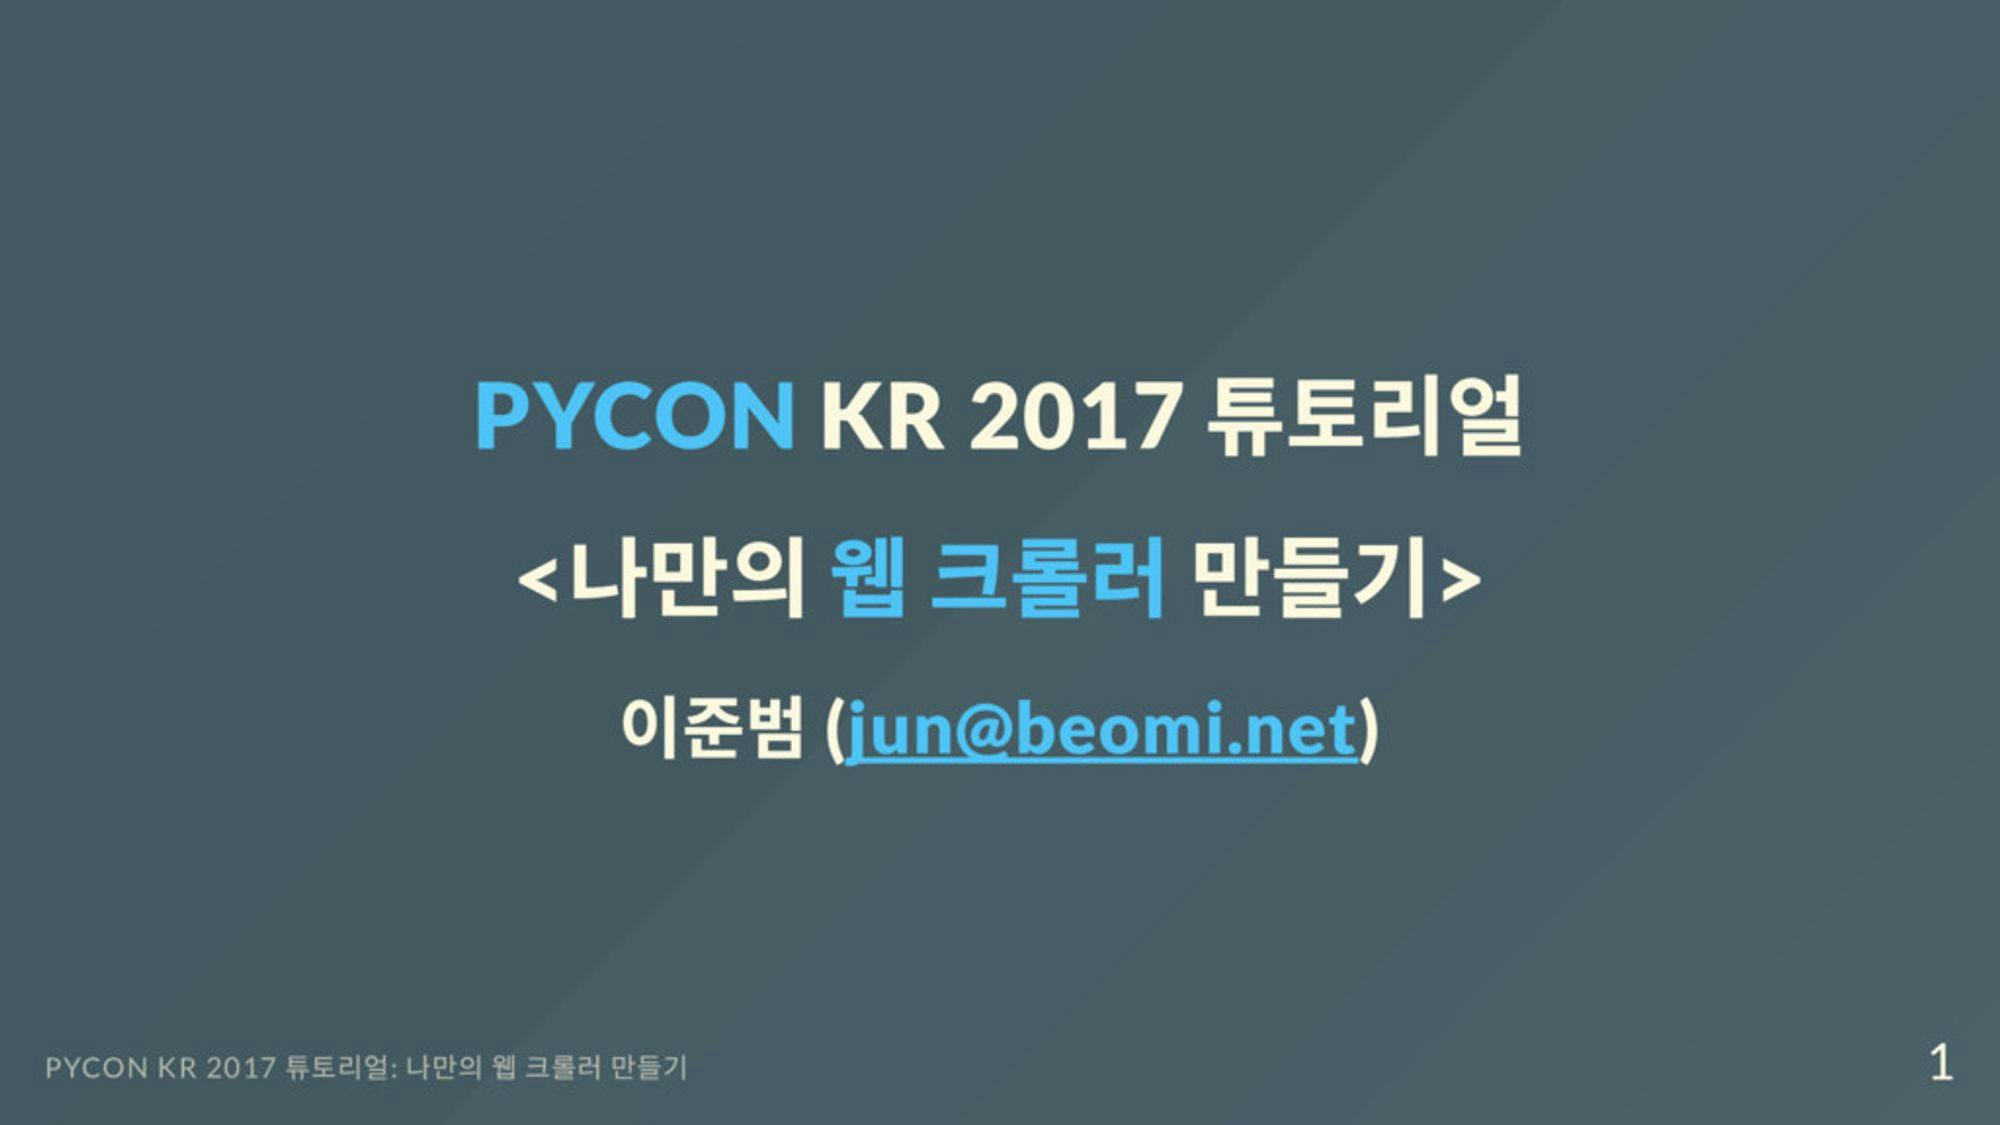 PYCON KR 2017 튜토리얼: 나만의 웹 크롤러 만들기